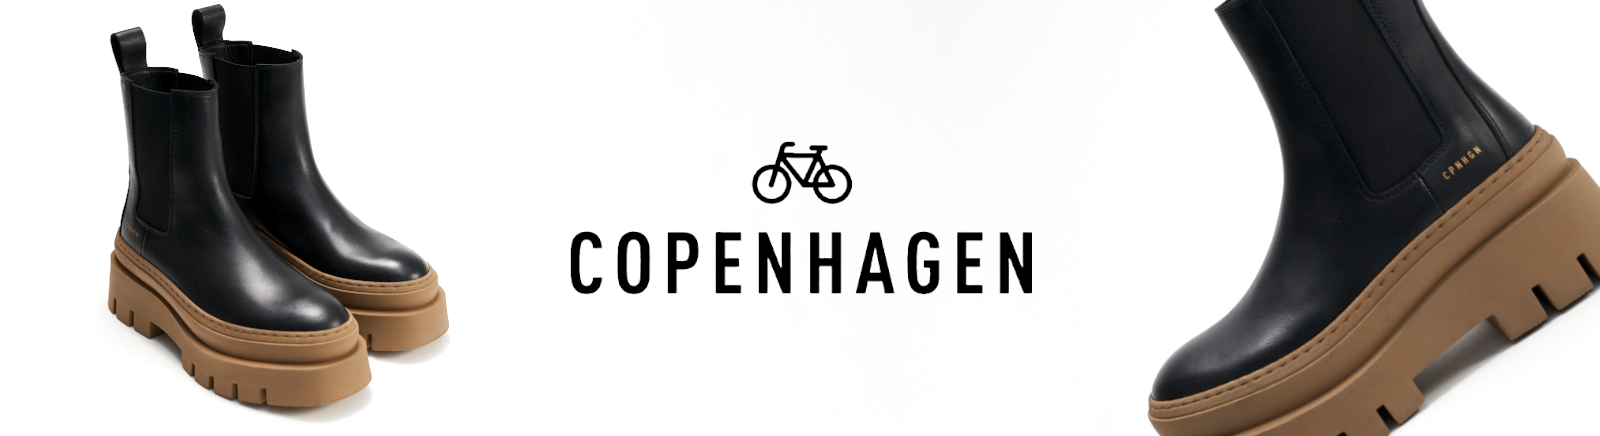 Juppen: Copenhagen Langschaftstiefel online shoppen